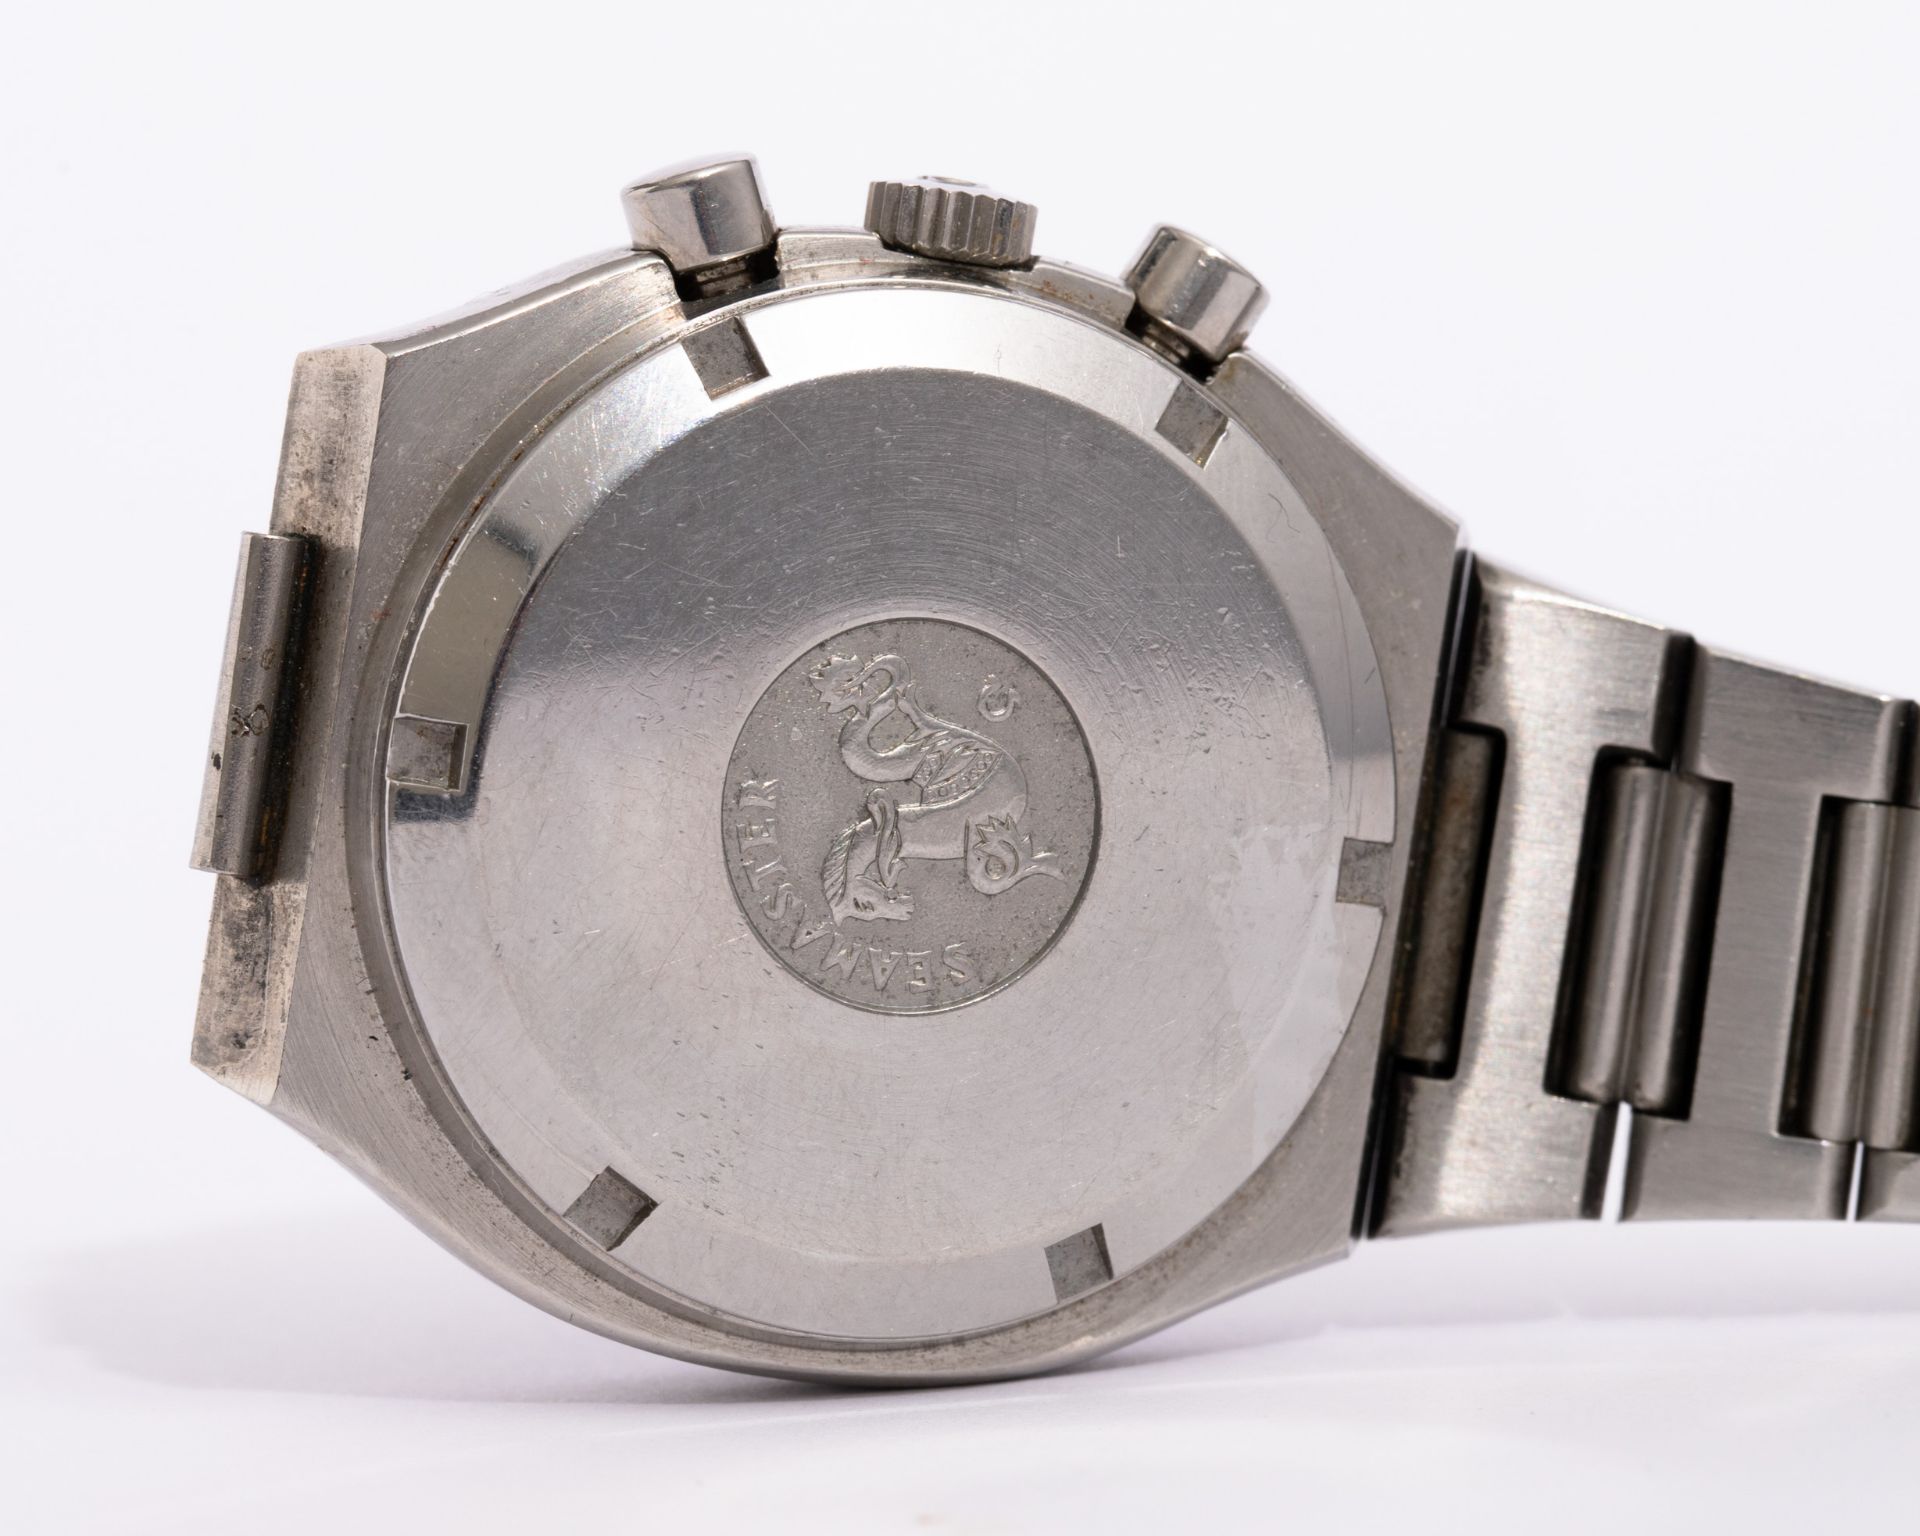 OMEGA Speedmaster Mark IV TV Chronograph wristwatch, Reference 176.0014, 1970s - Image 5 of 6